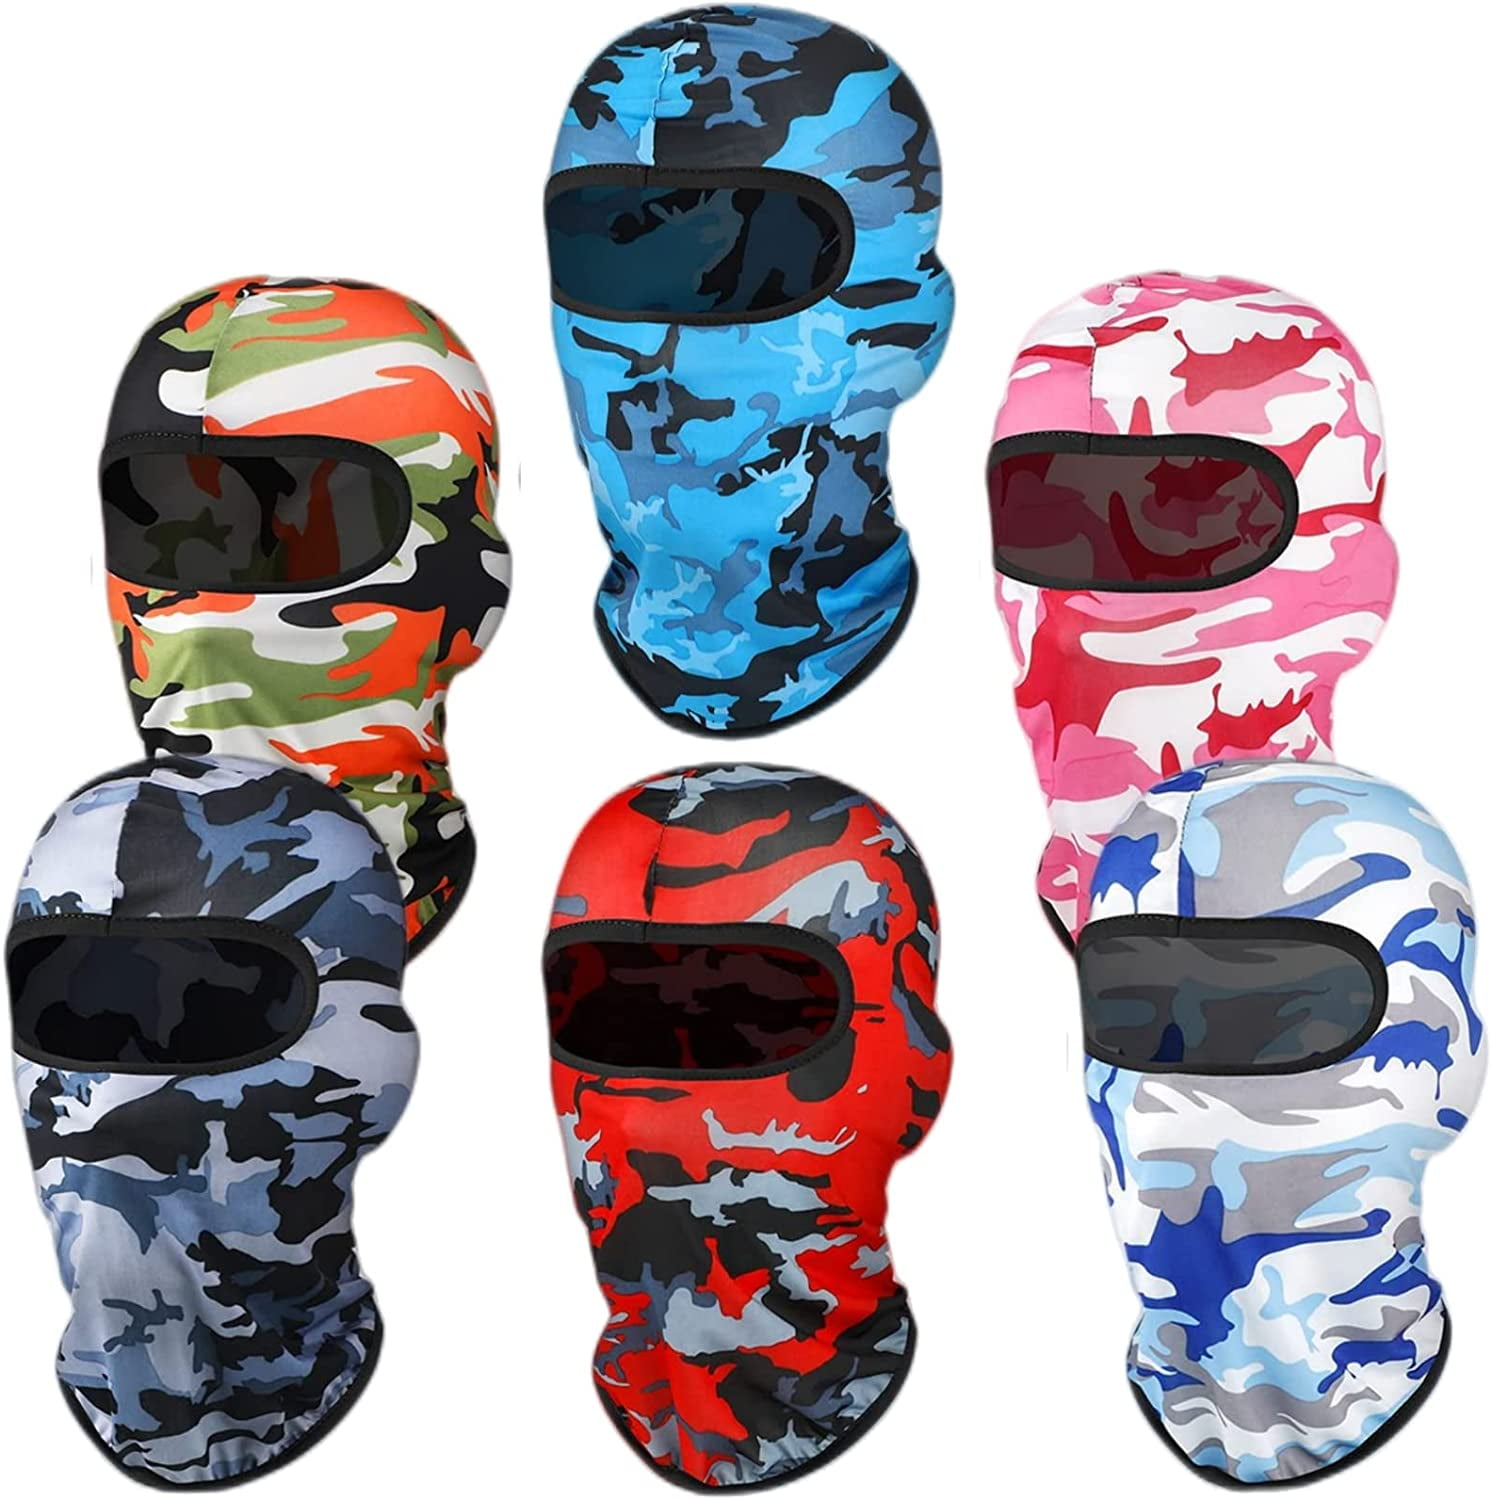 Balaclava Face Masks Ski Mask: 6 Pack Full Face Cover Motorcycle ...